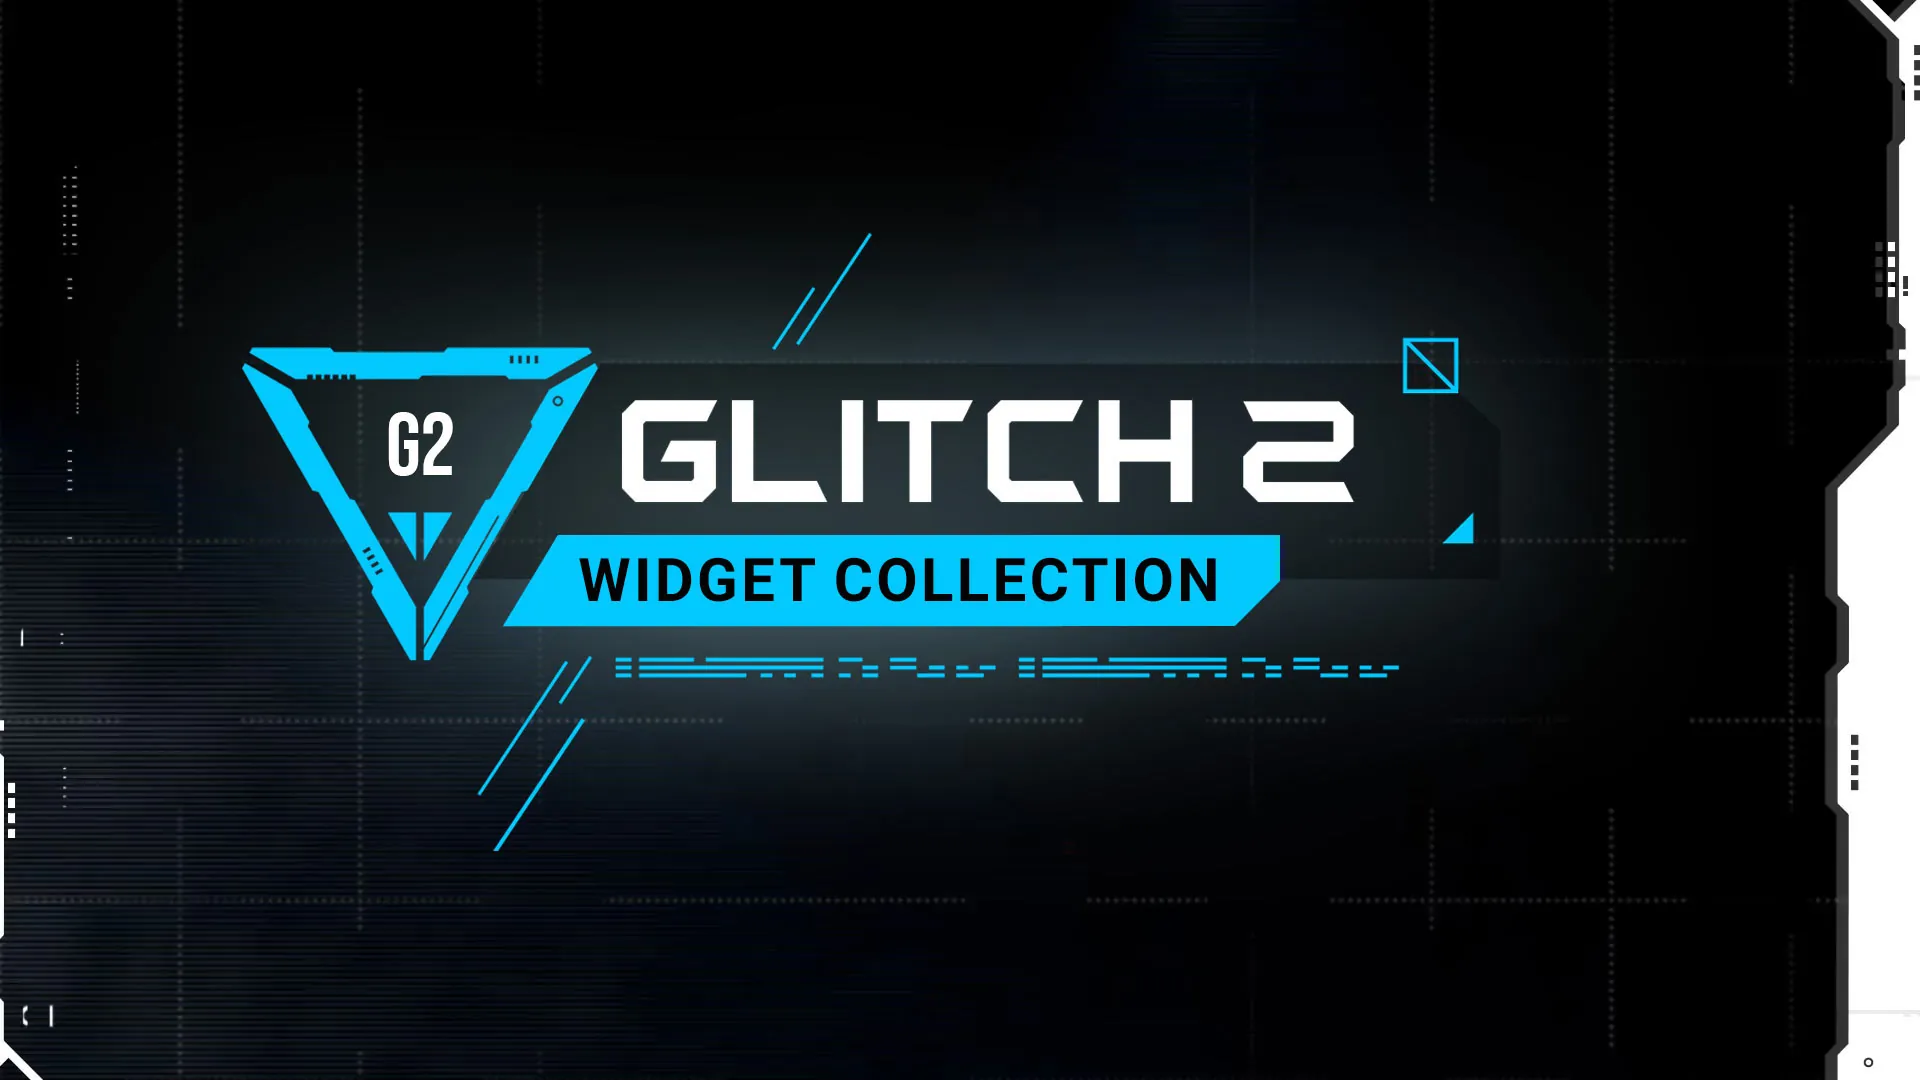 Glitch 2 - Widget Collection - Main Image